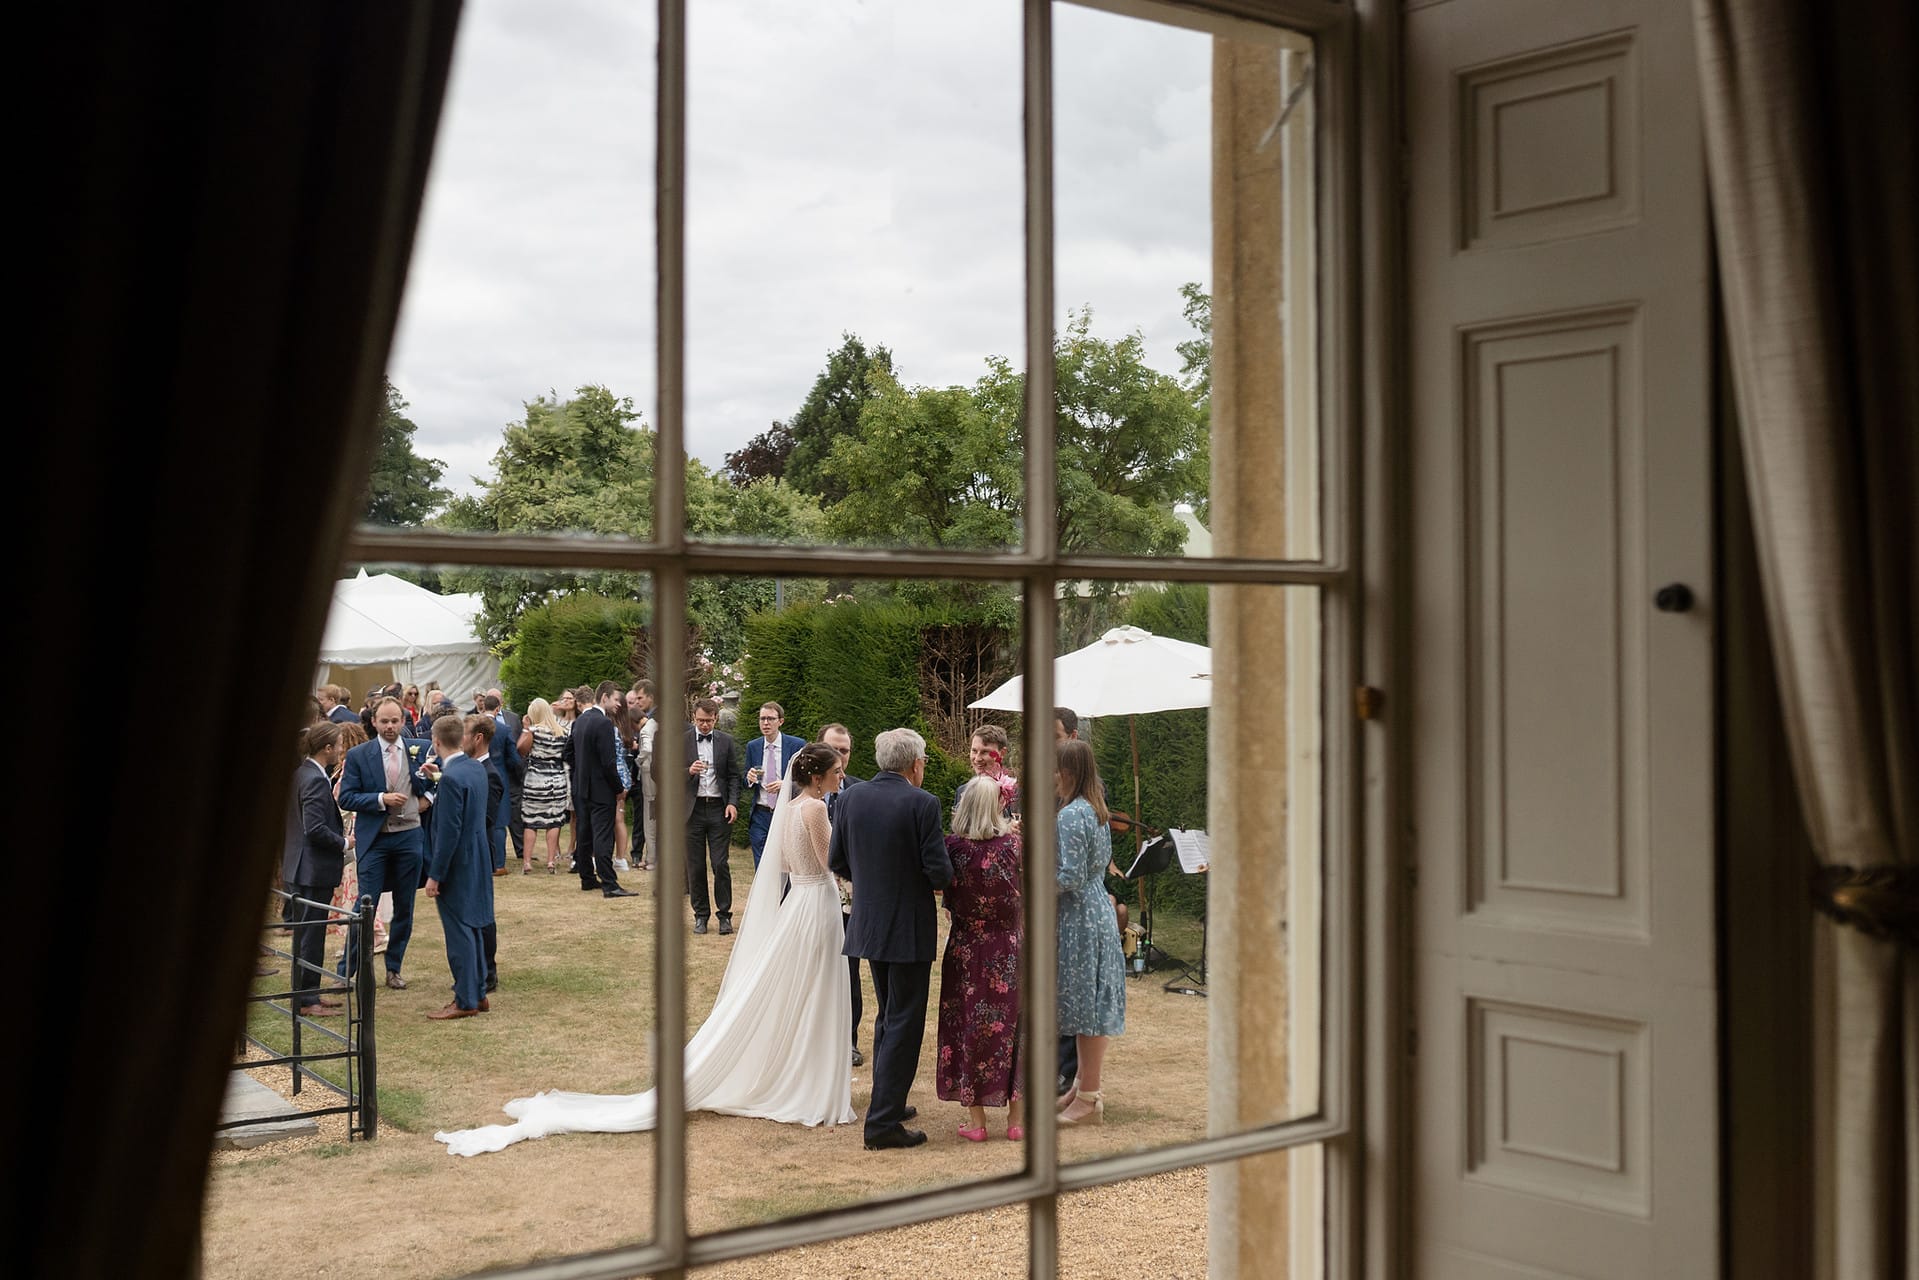 A view through a period sash window of a wedding drinks reception on a lawn